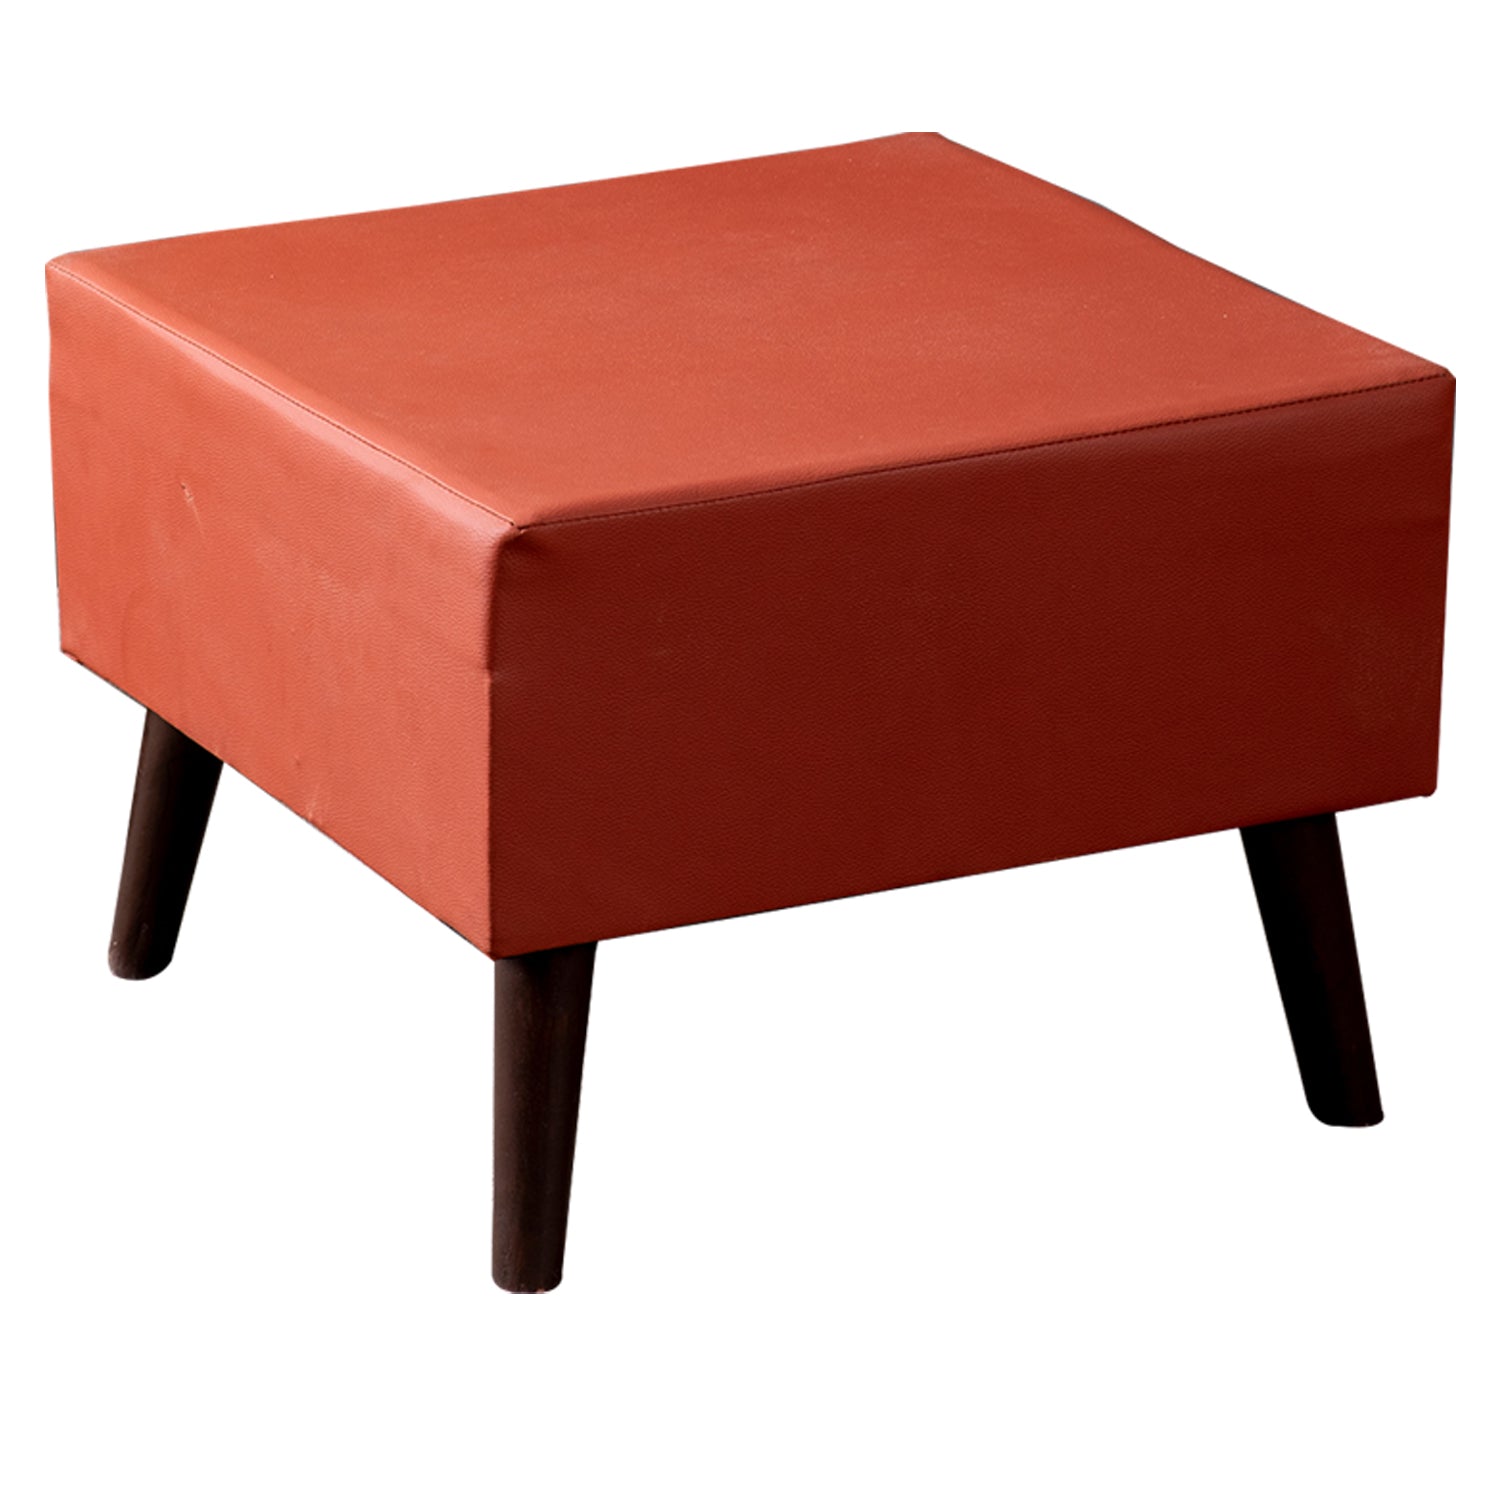 stool for pooja room